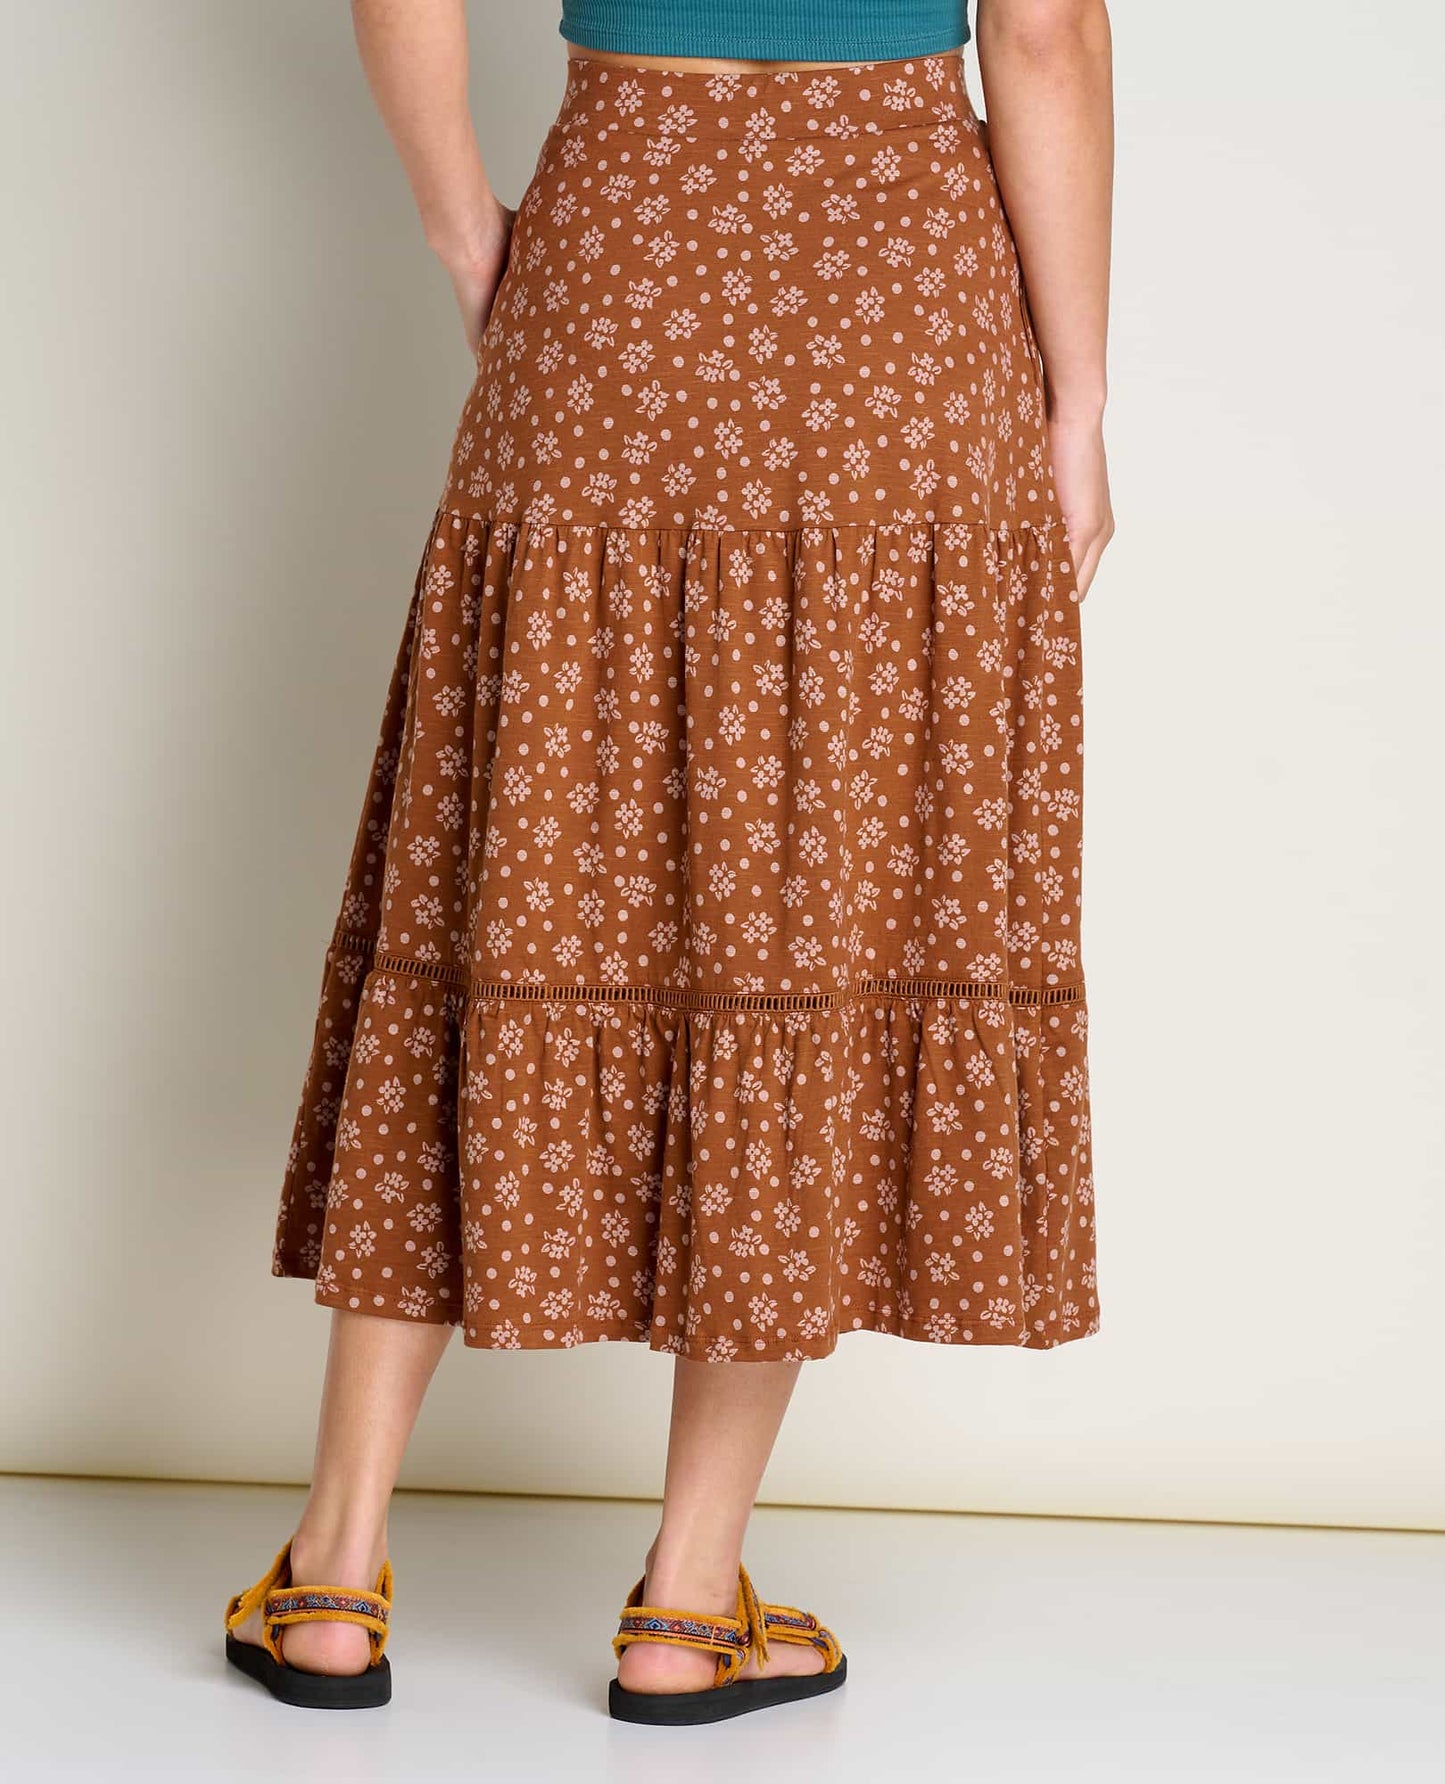 Toad & Co. Marigold Tiered Midi Skirt - Fawn Polka Dot Print